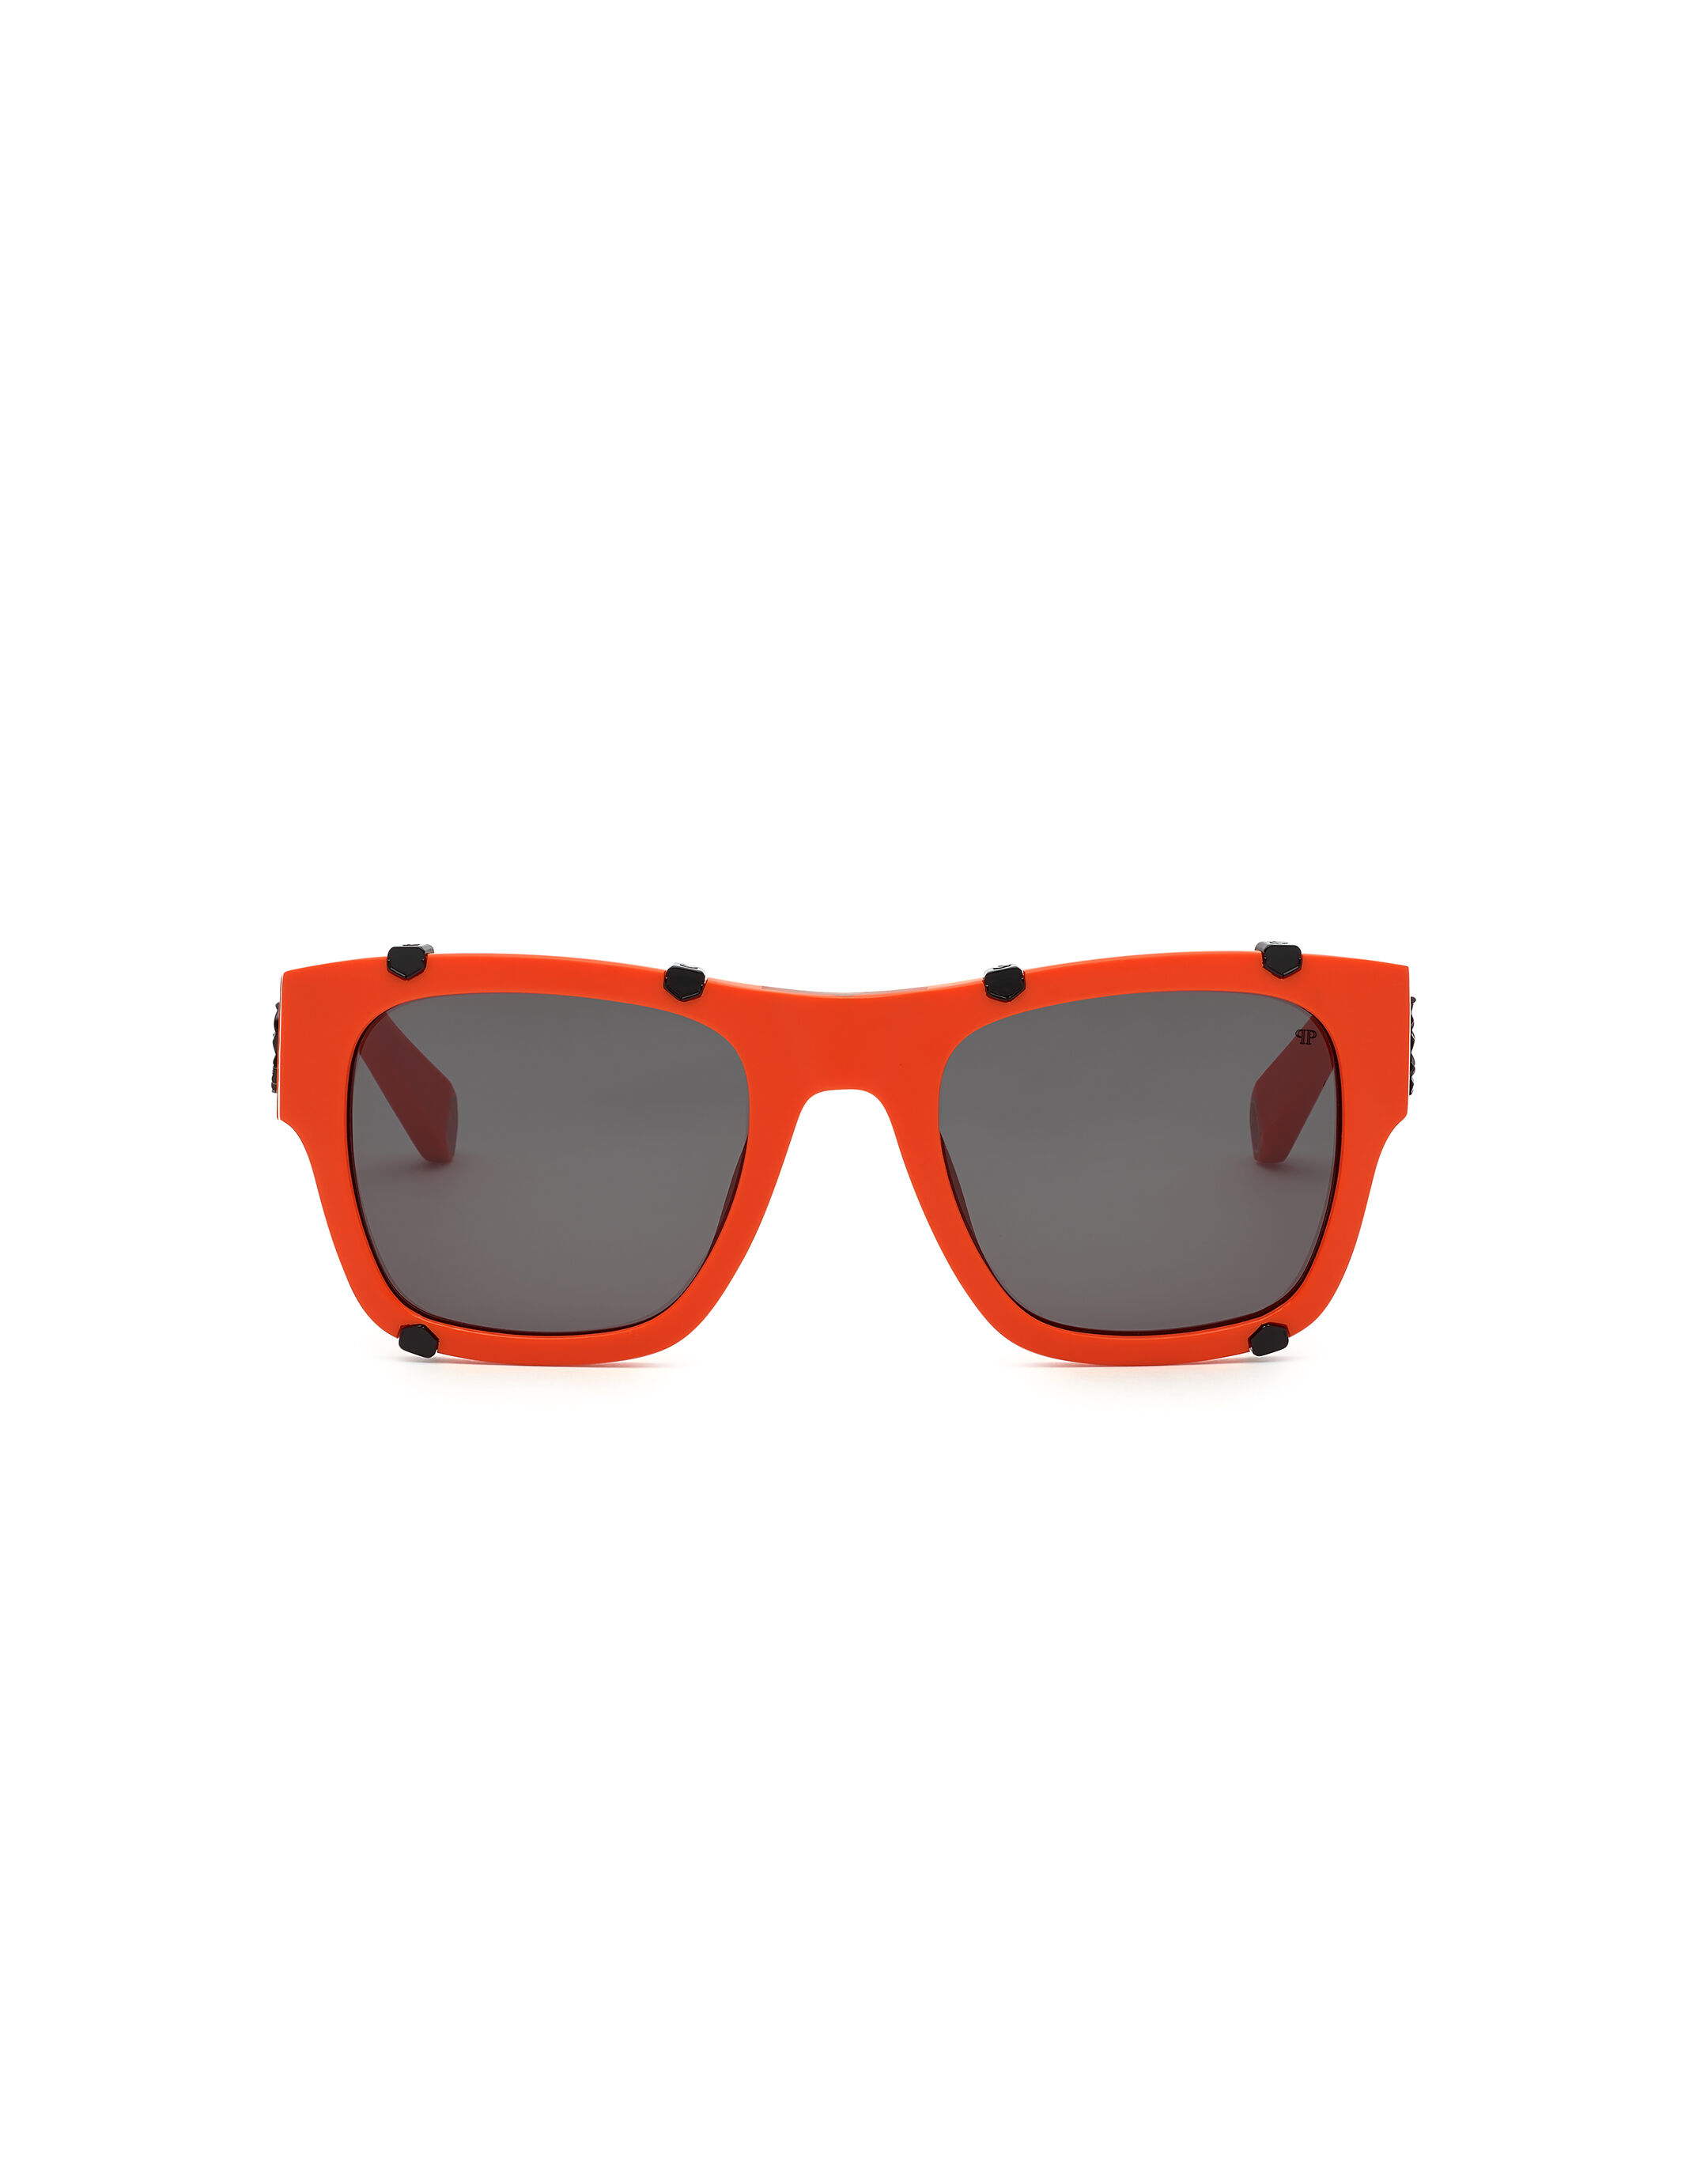 Jean Beige & Orange Sunglasses Retro 1960's 1970s Style UV400 - Etsy